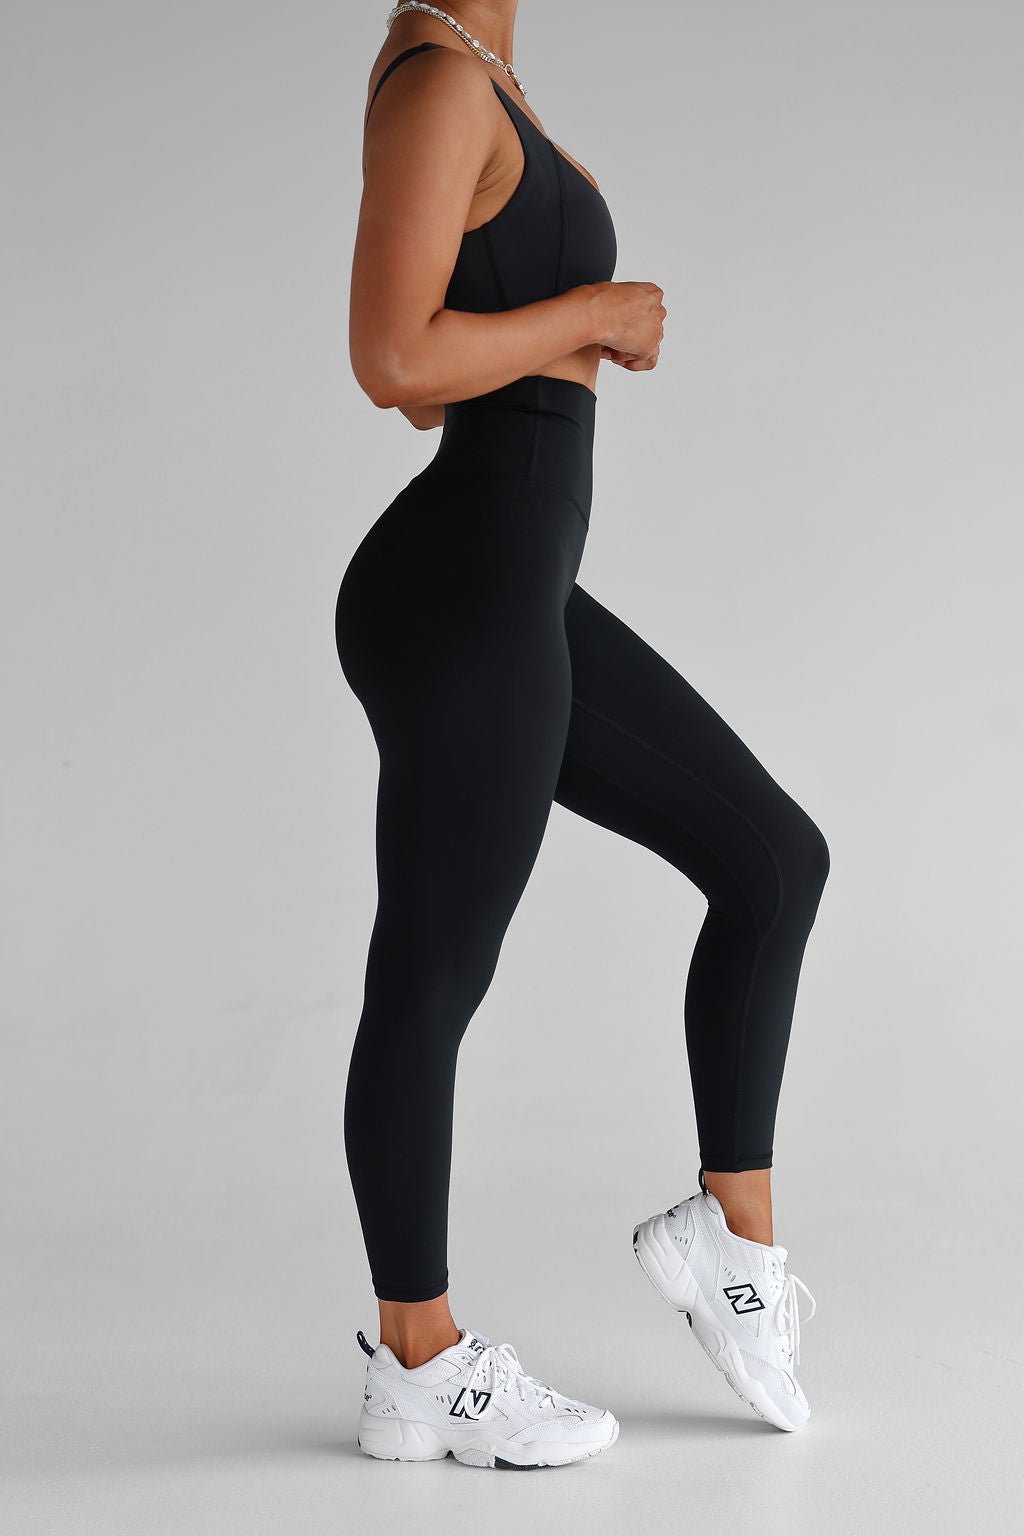 ENERBLOOM Women's Workout Leggings Cream Feeling Yoga Pants High Waisted  Stretch Tummy Control Tights 7/8 Length, Carbon Black, XS : :  Fashion